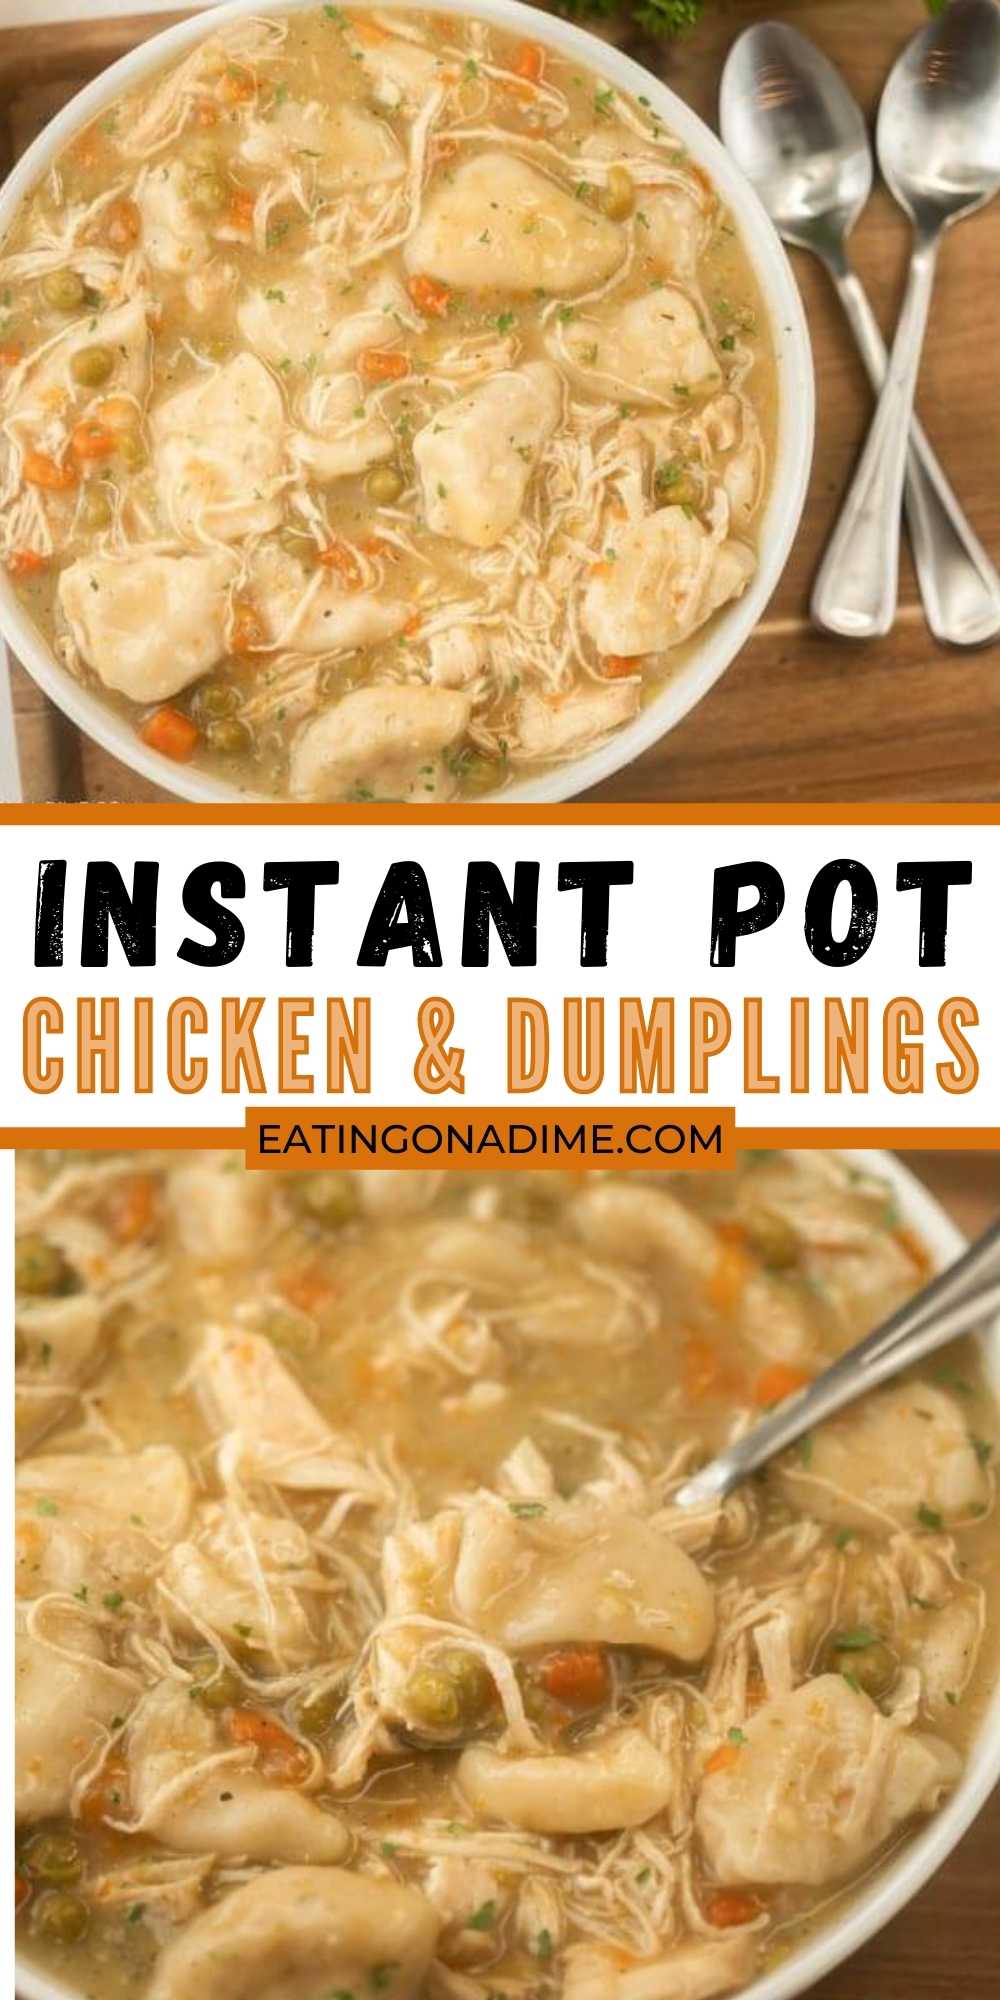 https://www.eatingonadime.com/wp-content/uploads/2021/07/Instant-Pot-Crock-Pot-Chicken-Dumplings-Pin-3.jpg